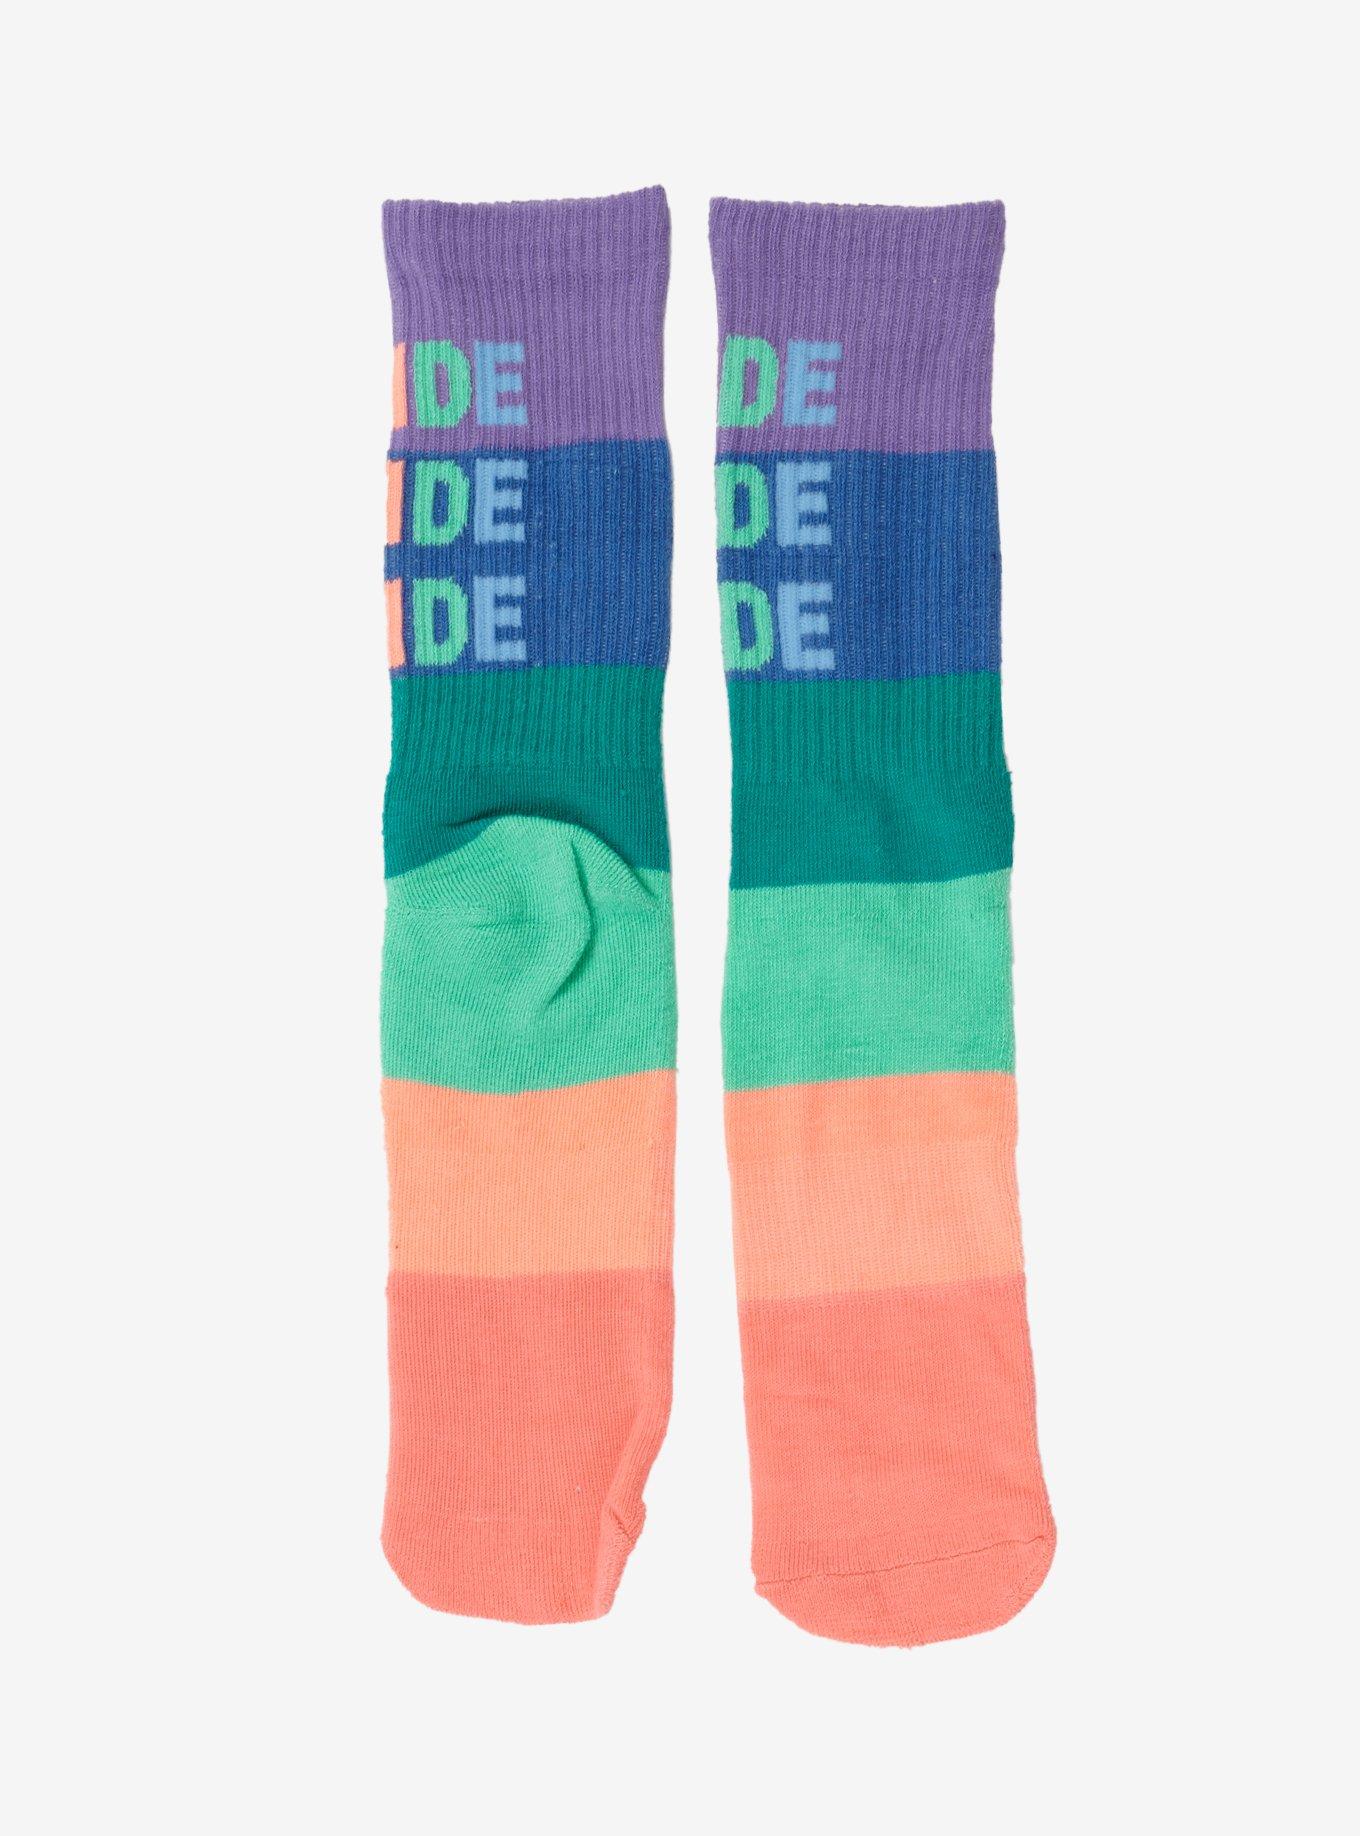 Pride Pride Pride Gradient Crew Socks - BoxLunch Exclusive, , alternate